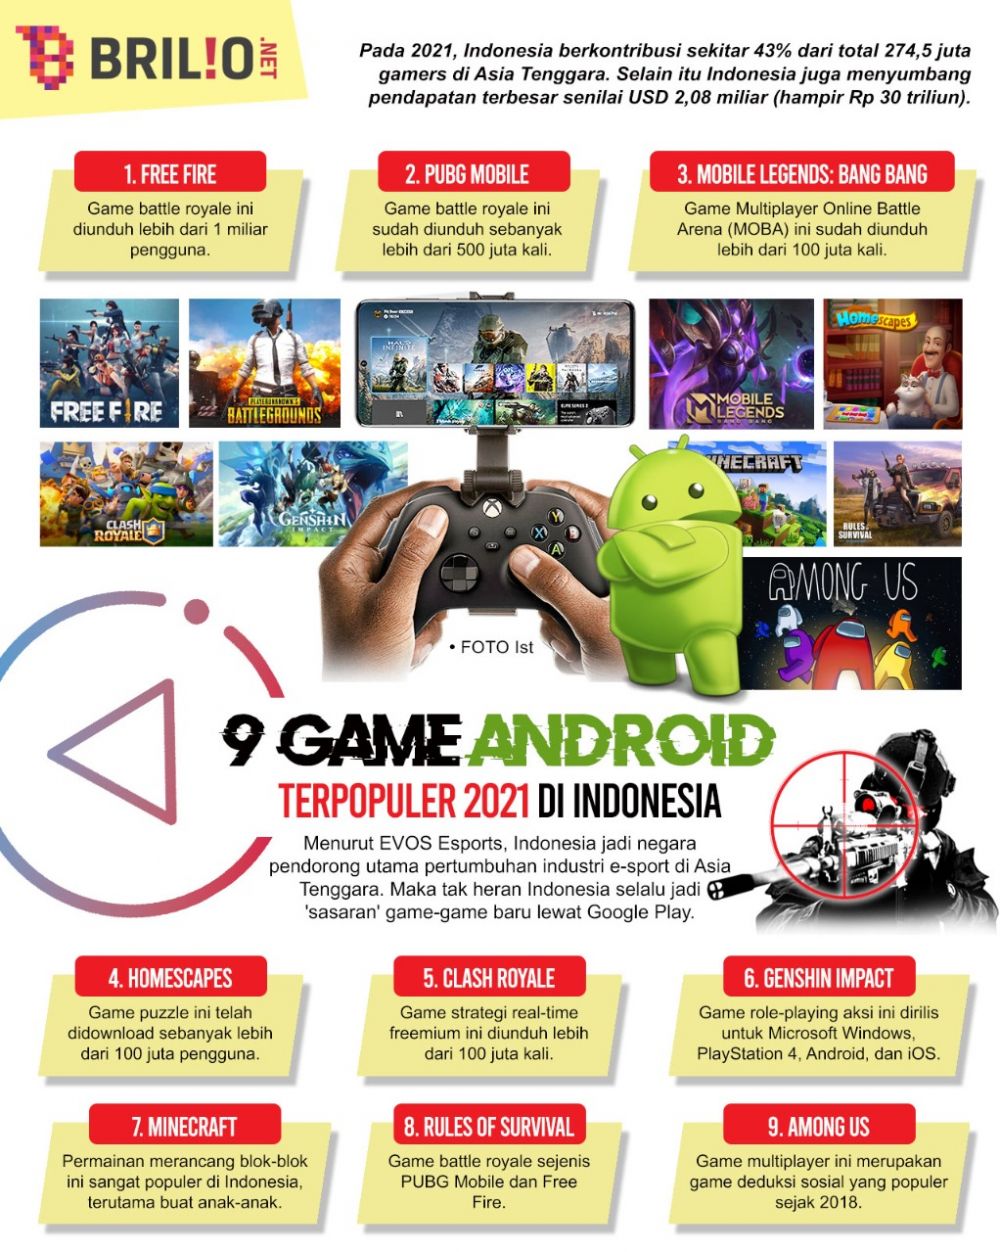 9 Game Android terpopuler 2021 di Indonesia, Free Fire unggul